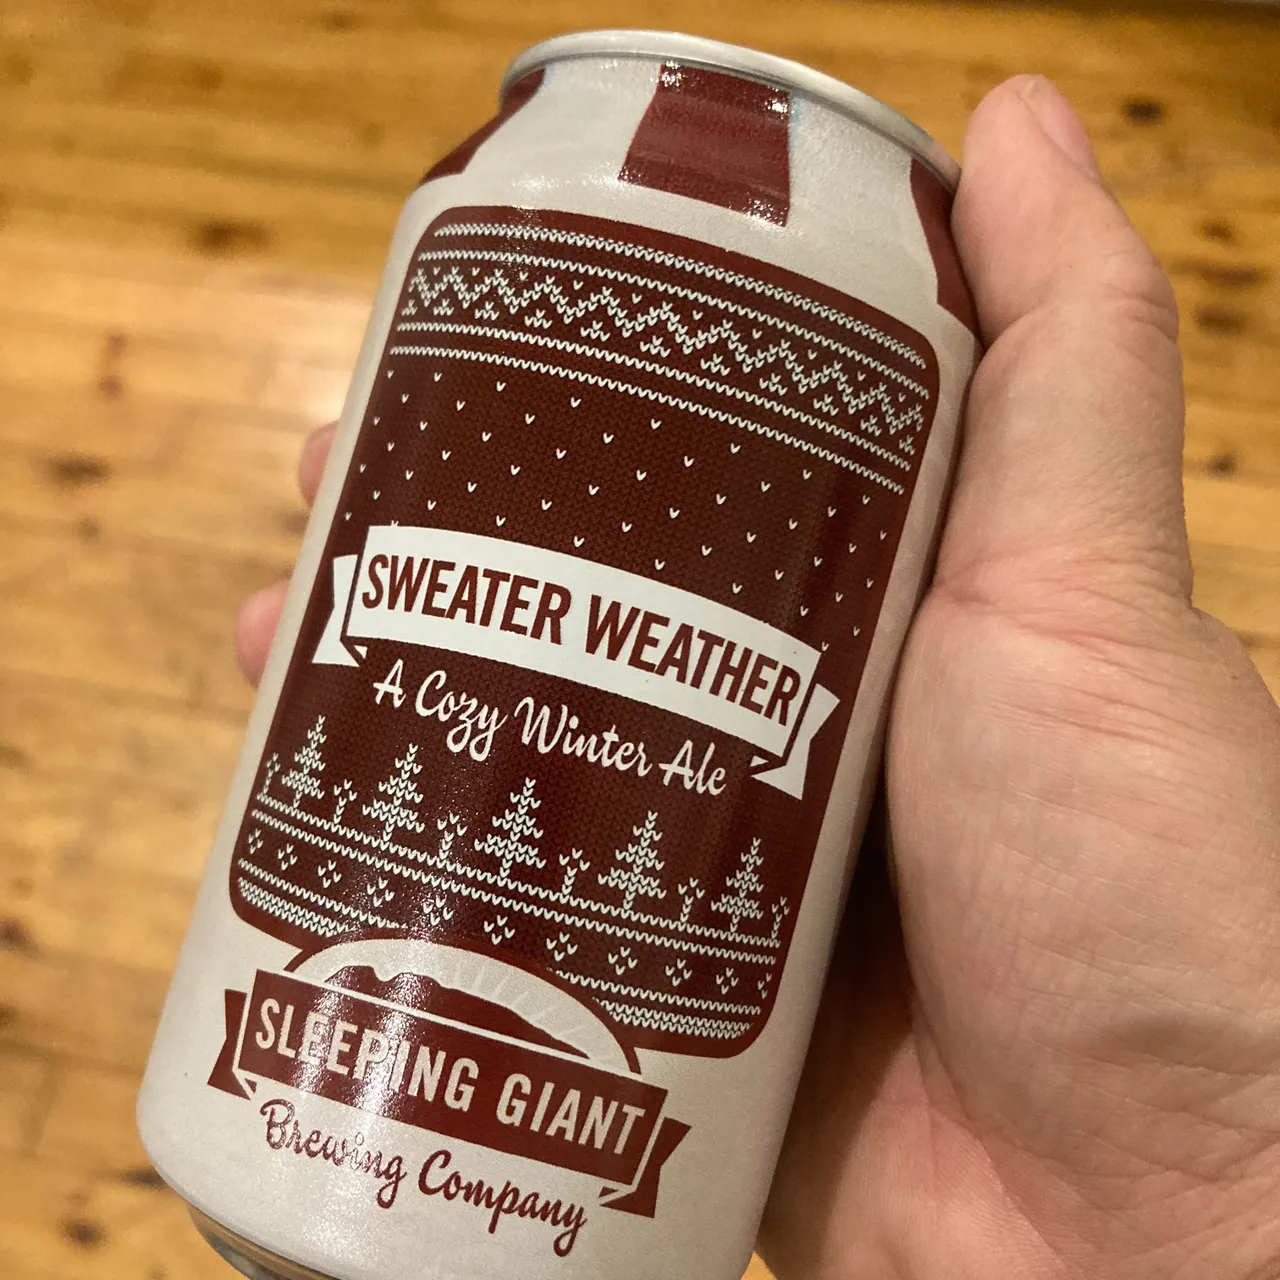 Craft winter ale photo 1